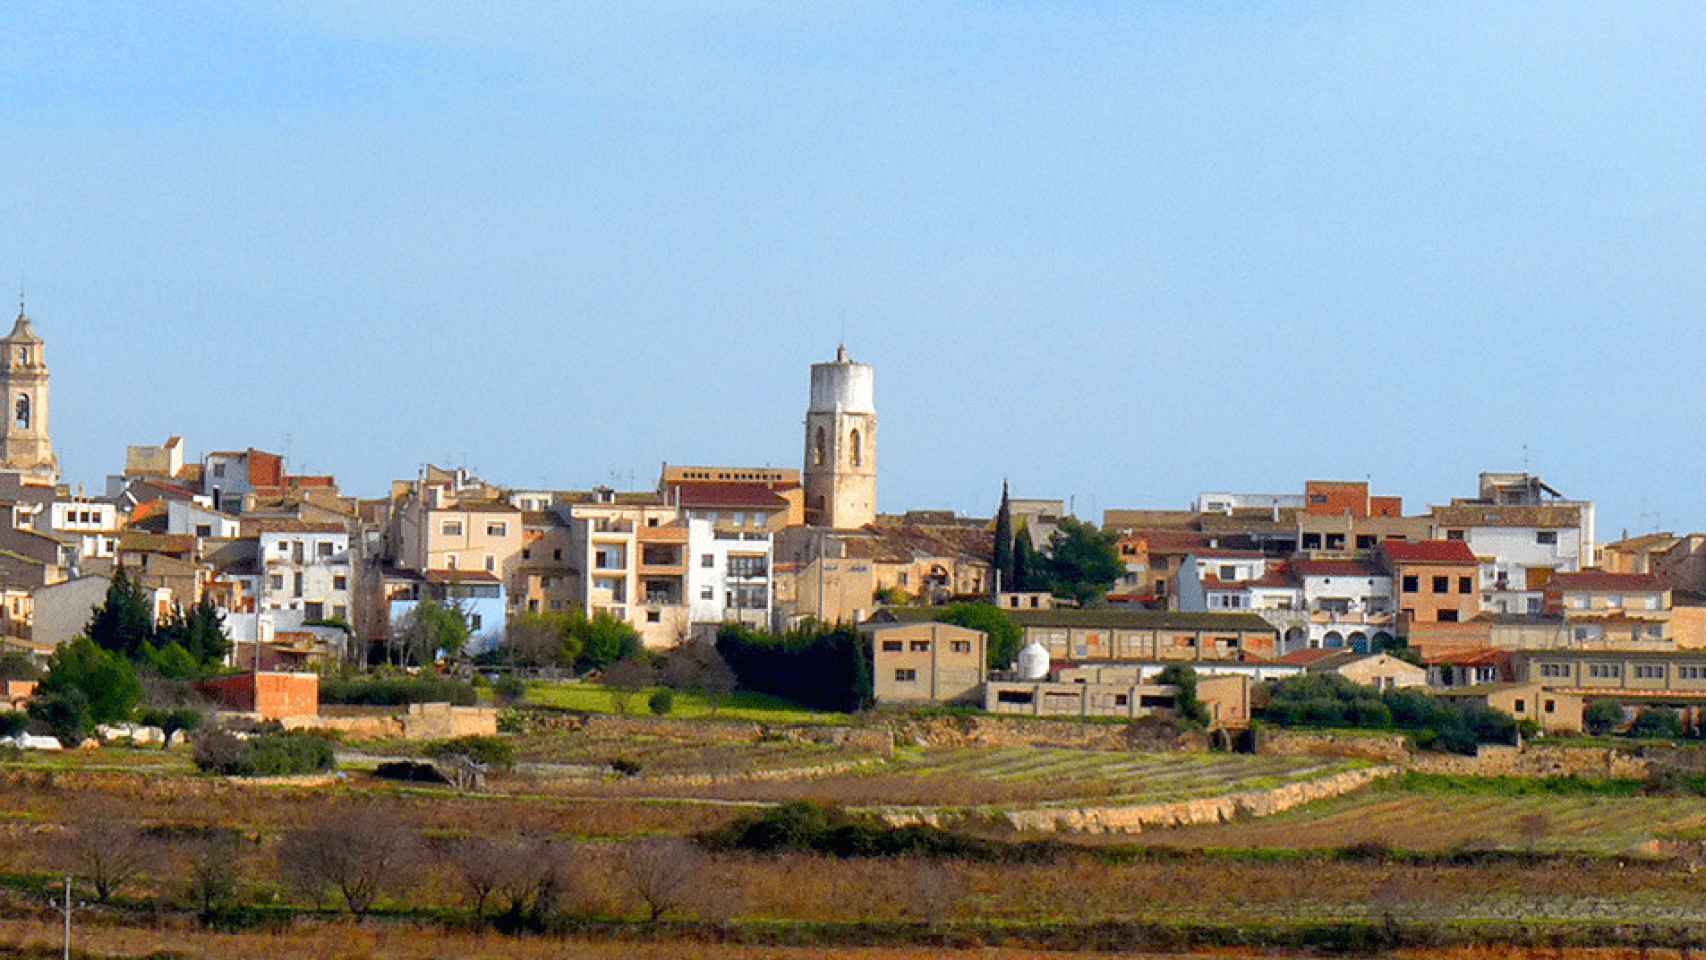 Vilabella